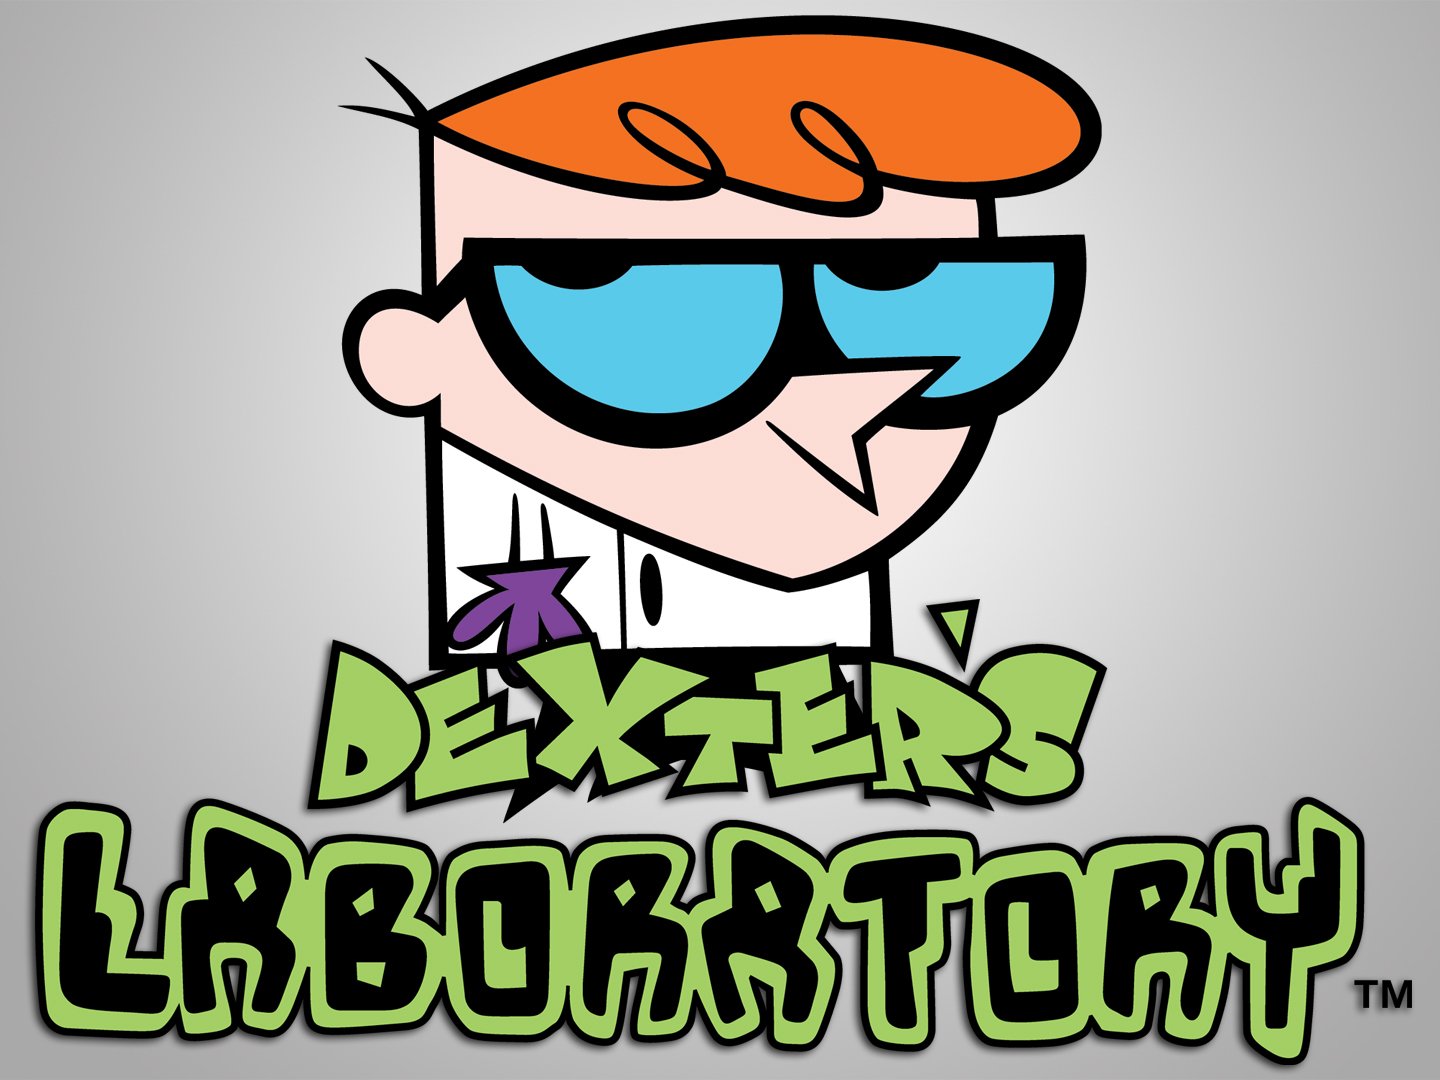 Dexter cartoon wallpapers